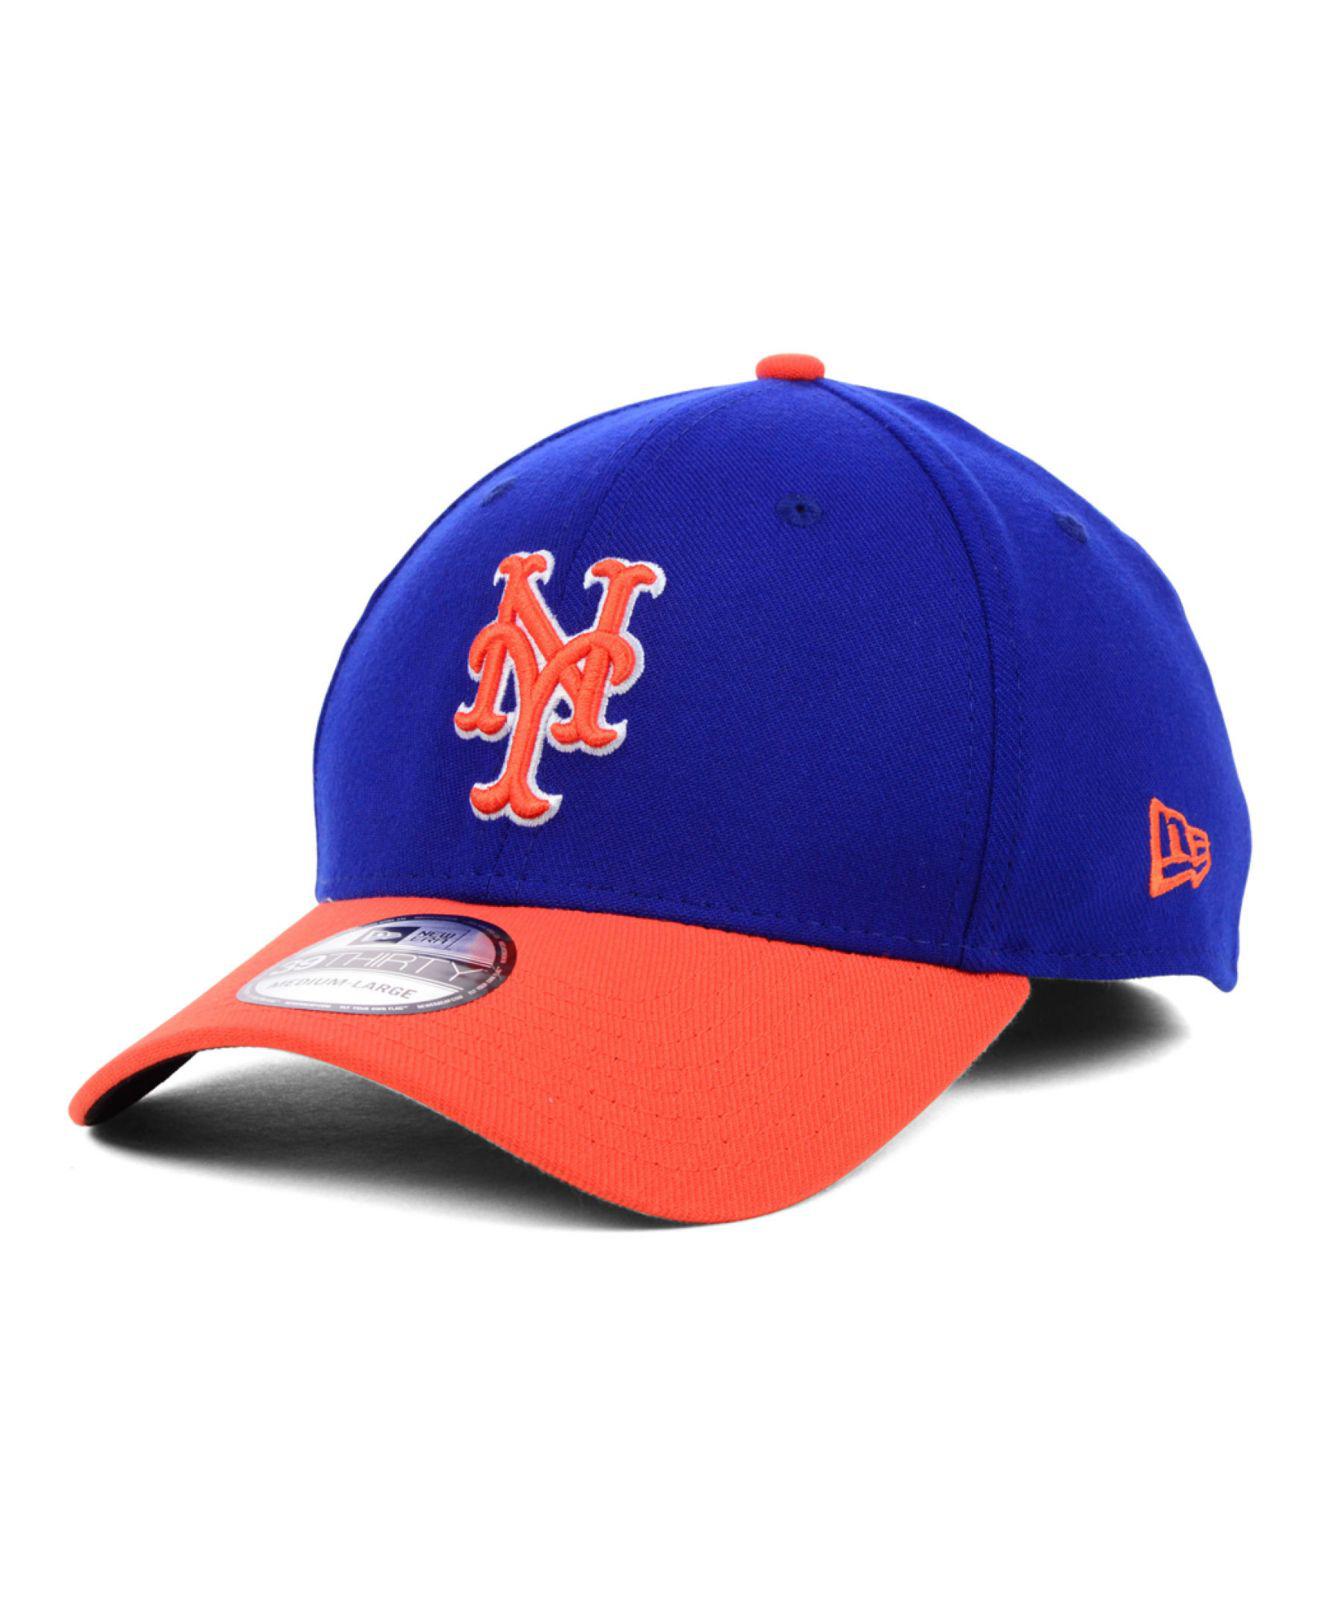 Lyst - KTZ New York Mets Mlb Team Classic 39thirty Cap in Orange for Men